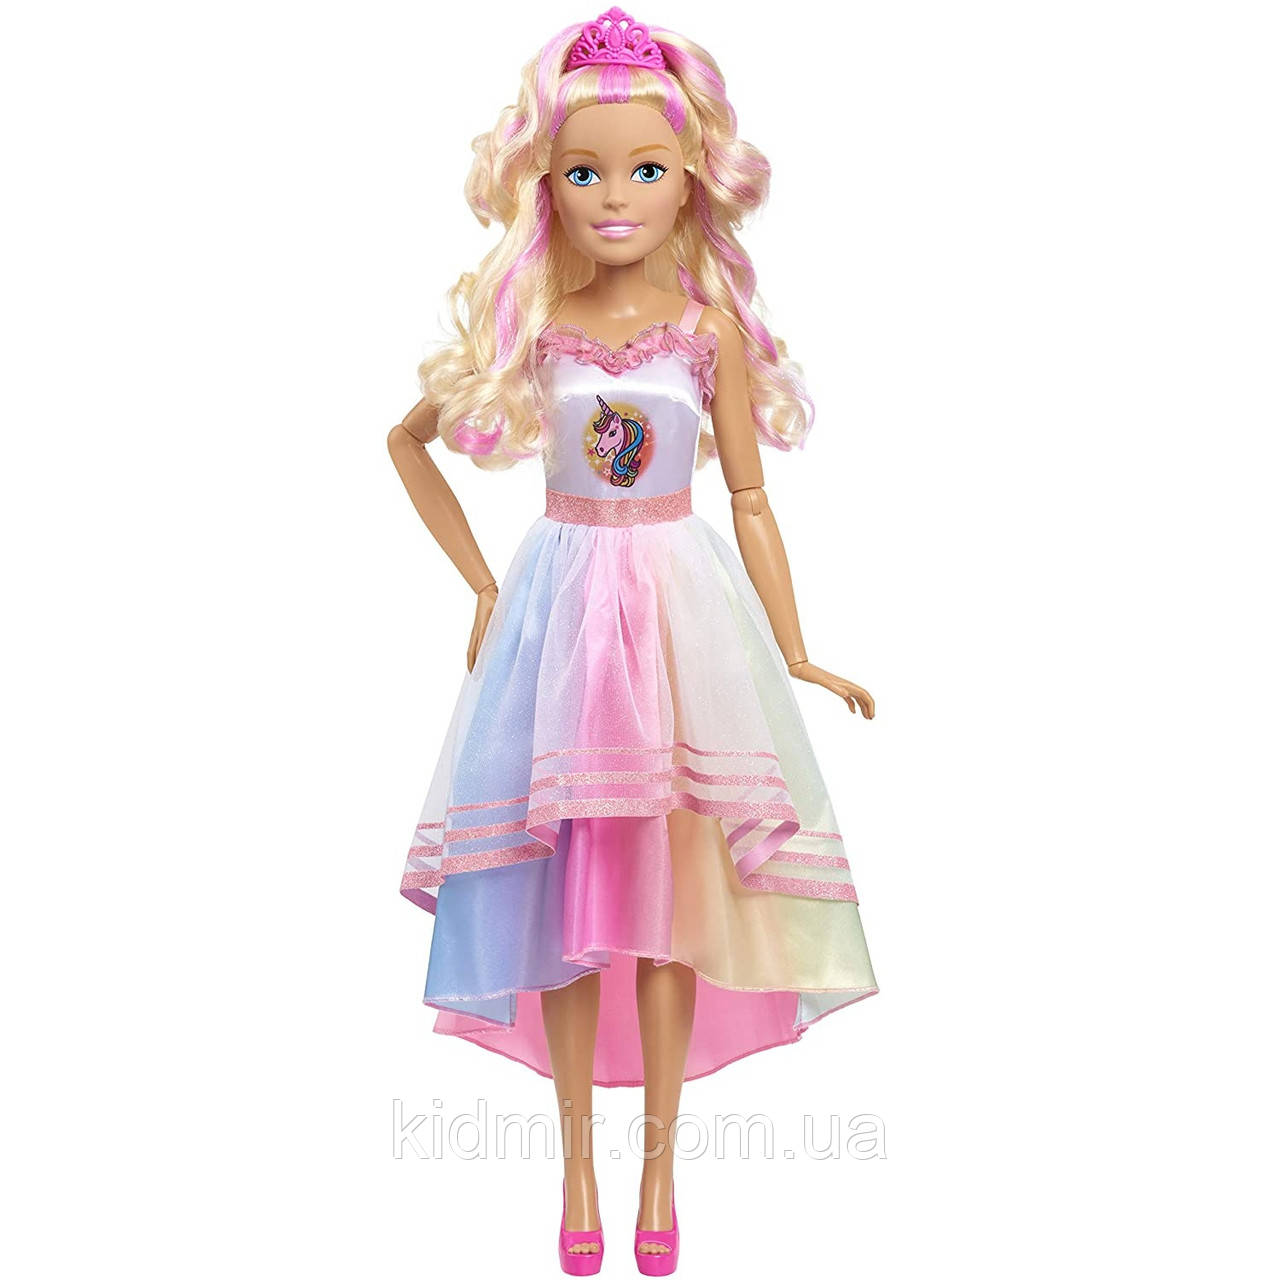 Лялька Барбі велика Модна подружка 70 см Barbie 28-inch Best Fashion Friend 63650